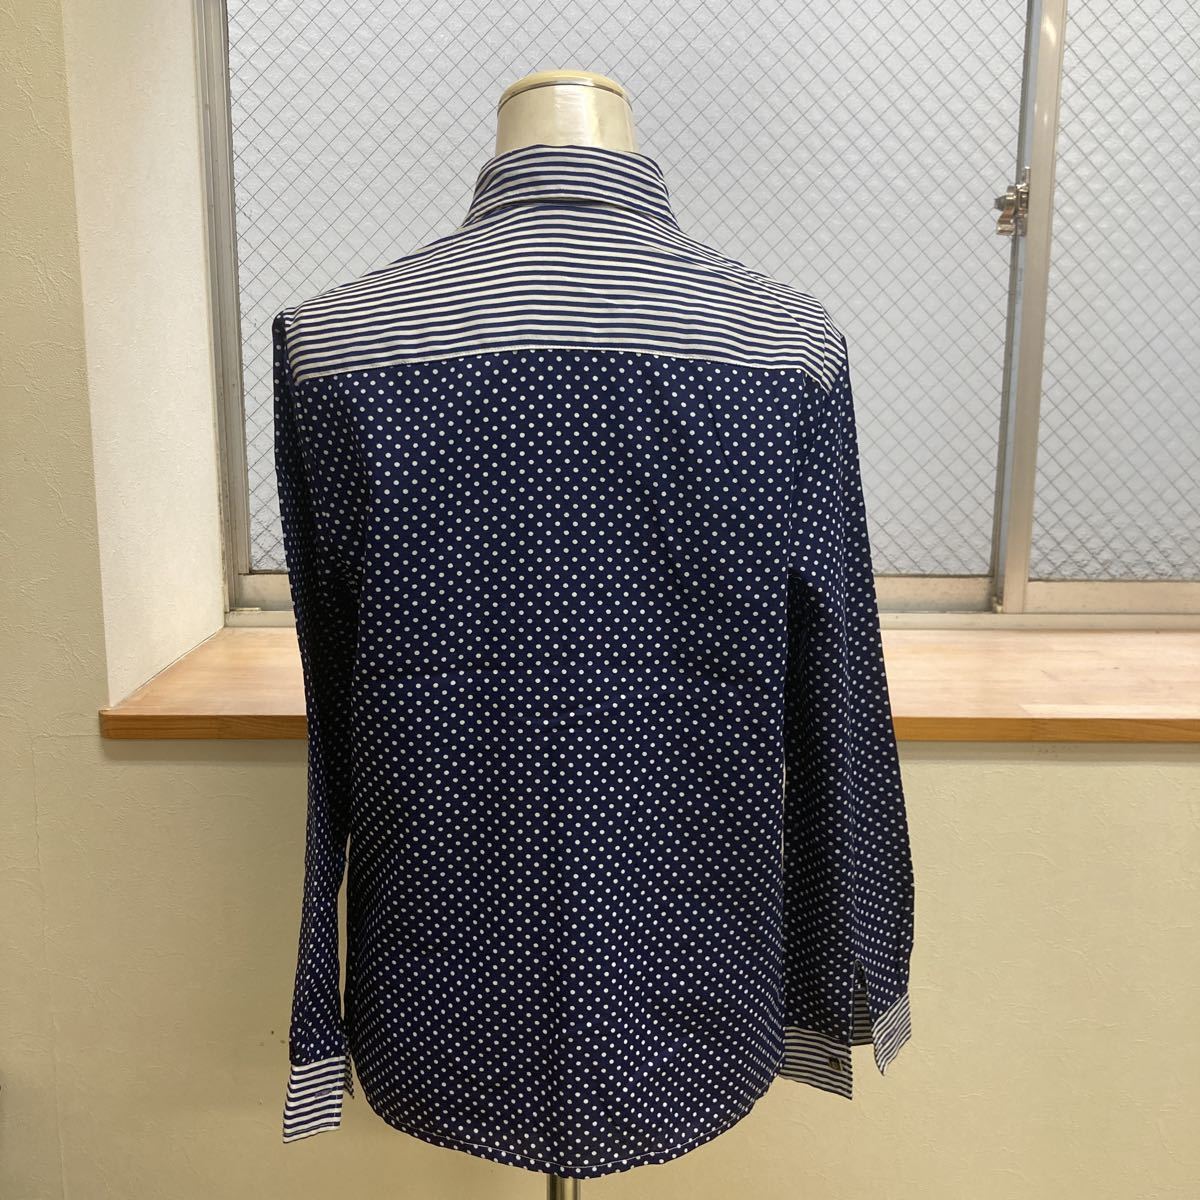 [ рубашка точка полоса ] темно-синий tops длинный рукав Showa Retro унисекс б/у одежда Vintage мода [C8-1③]1205